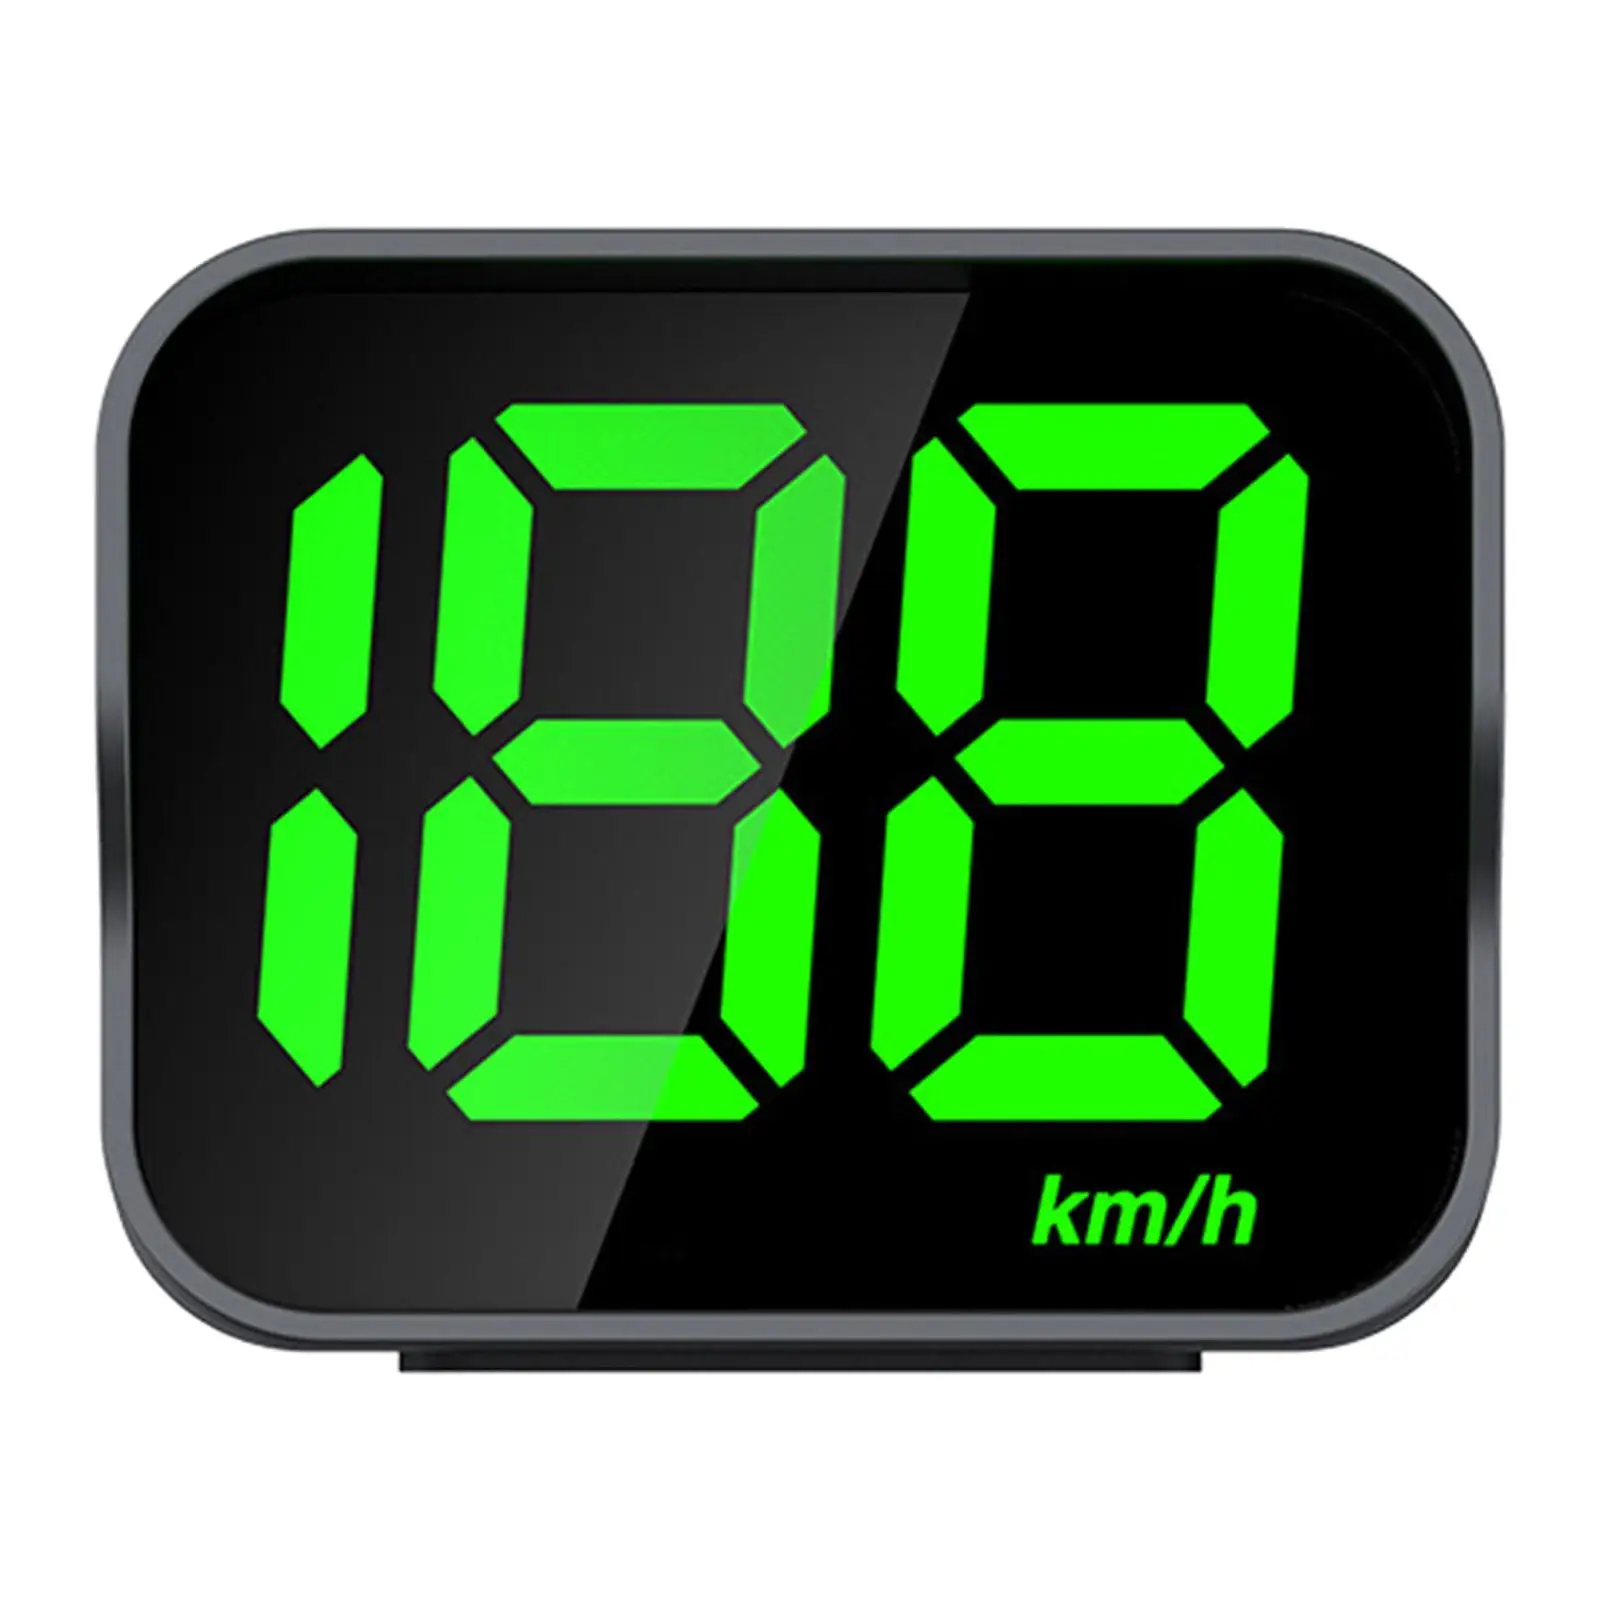 Bluetooth M1 GPS Head up Display Speedometer Big Fonts Overspeed Warning Kmh Digital Speed Display for Cars Truck Mini Size